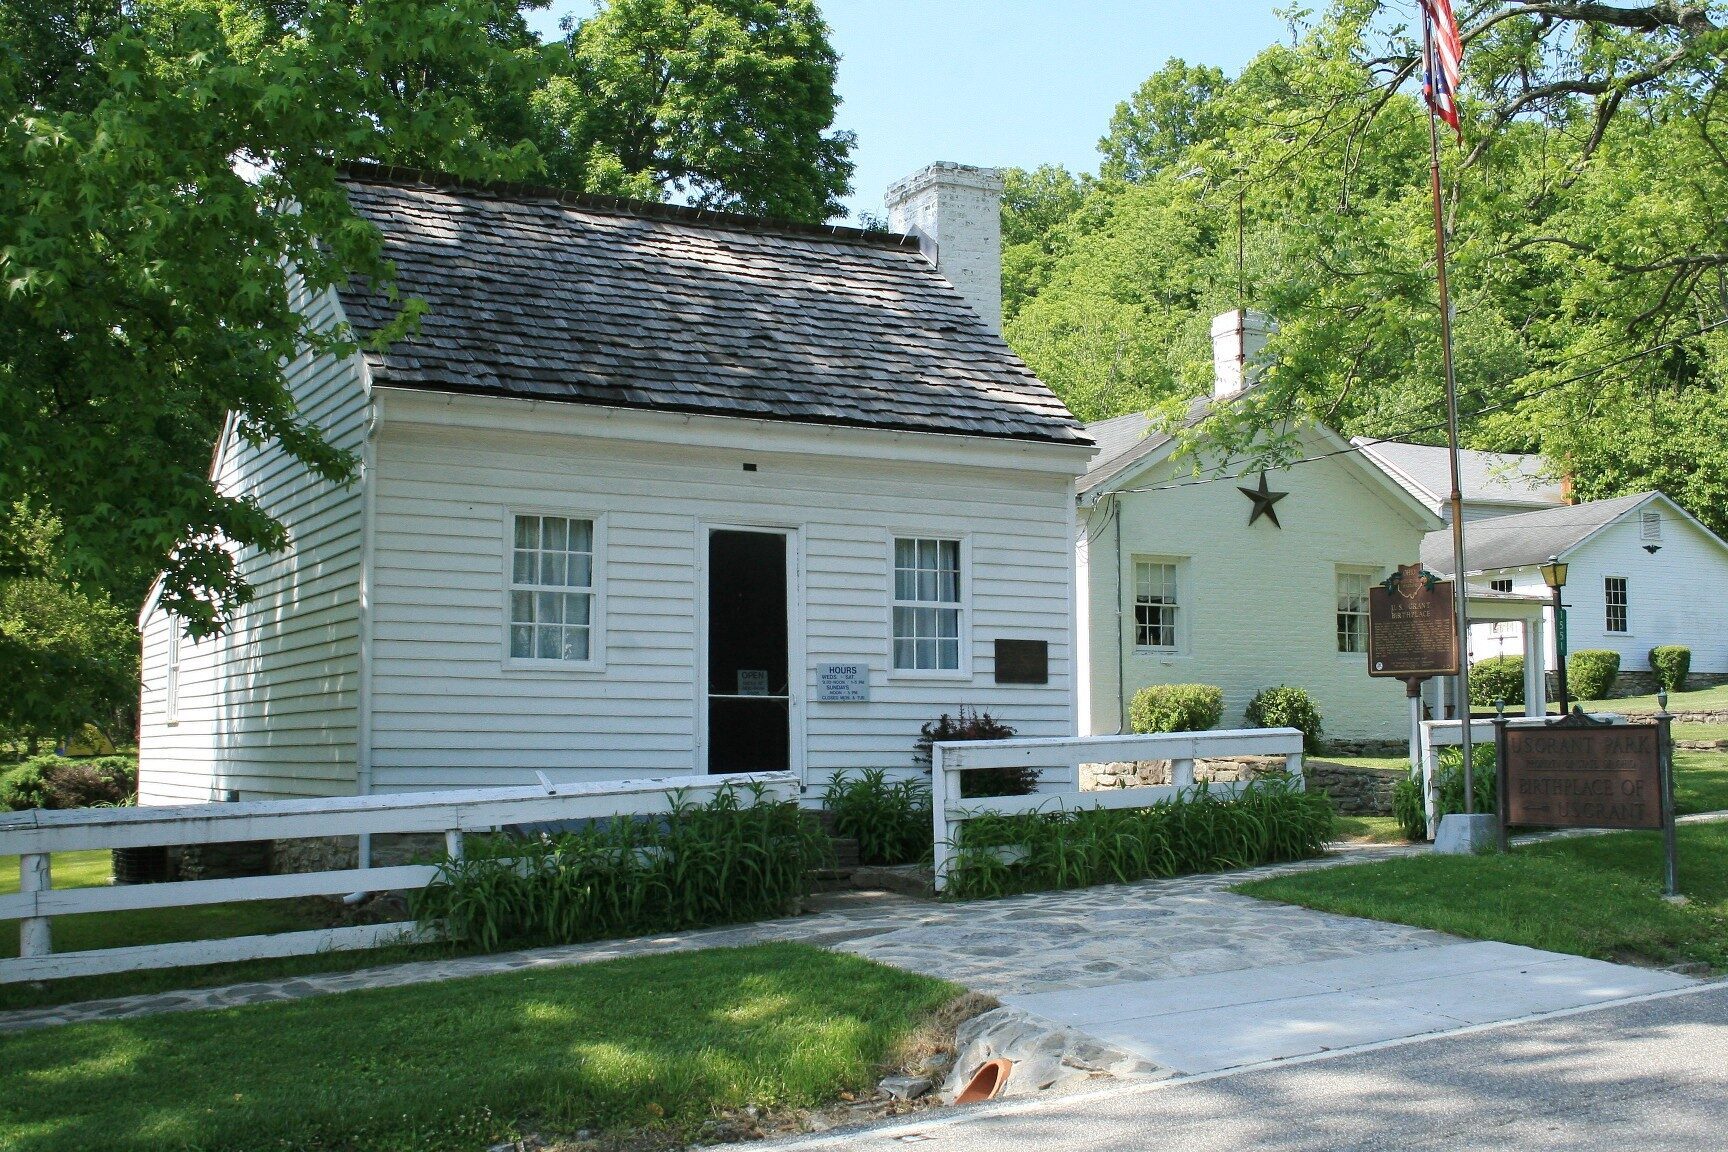 U.S. Grant’s Birthplace & Museum